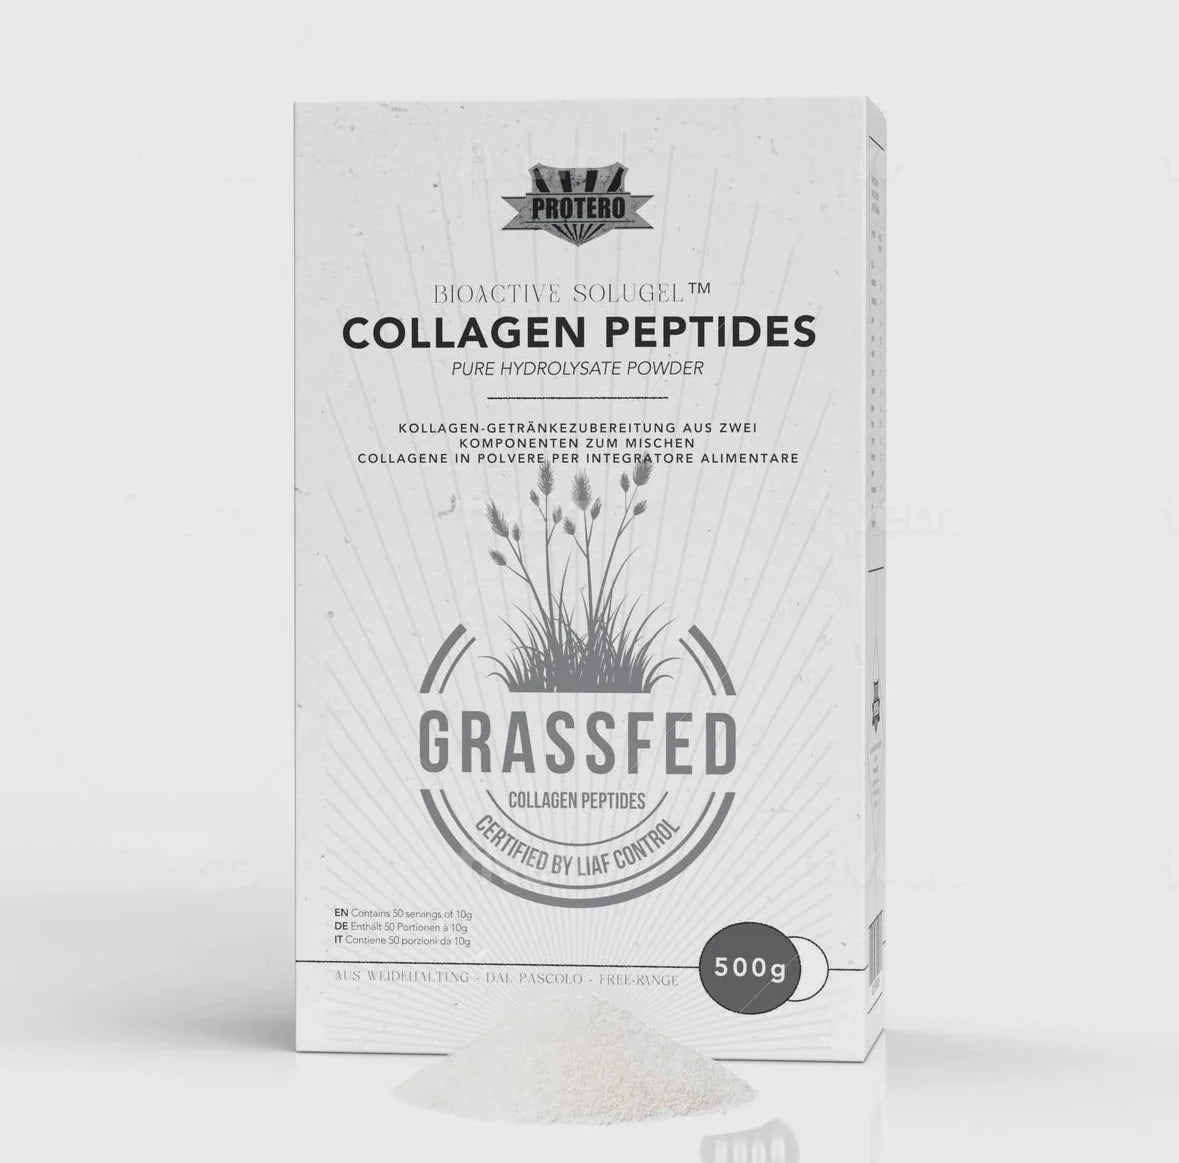 Grass-fed collagen peptides 500 g